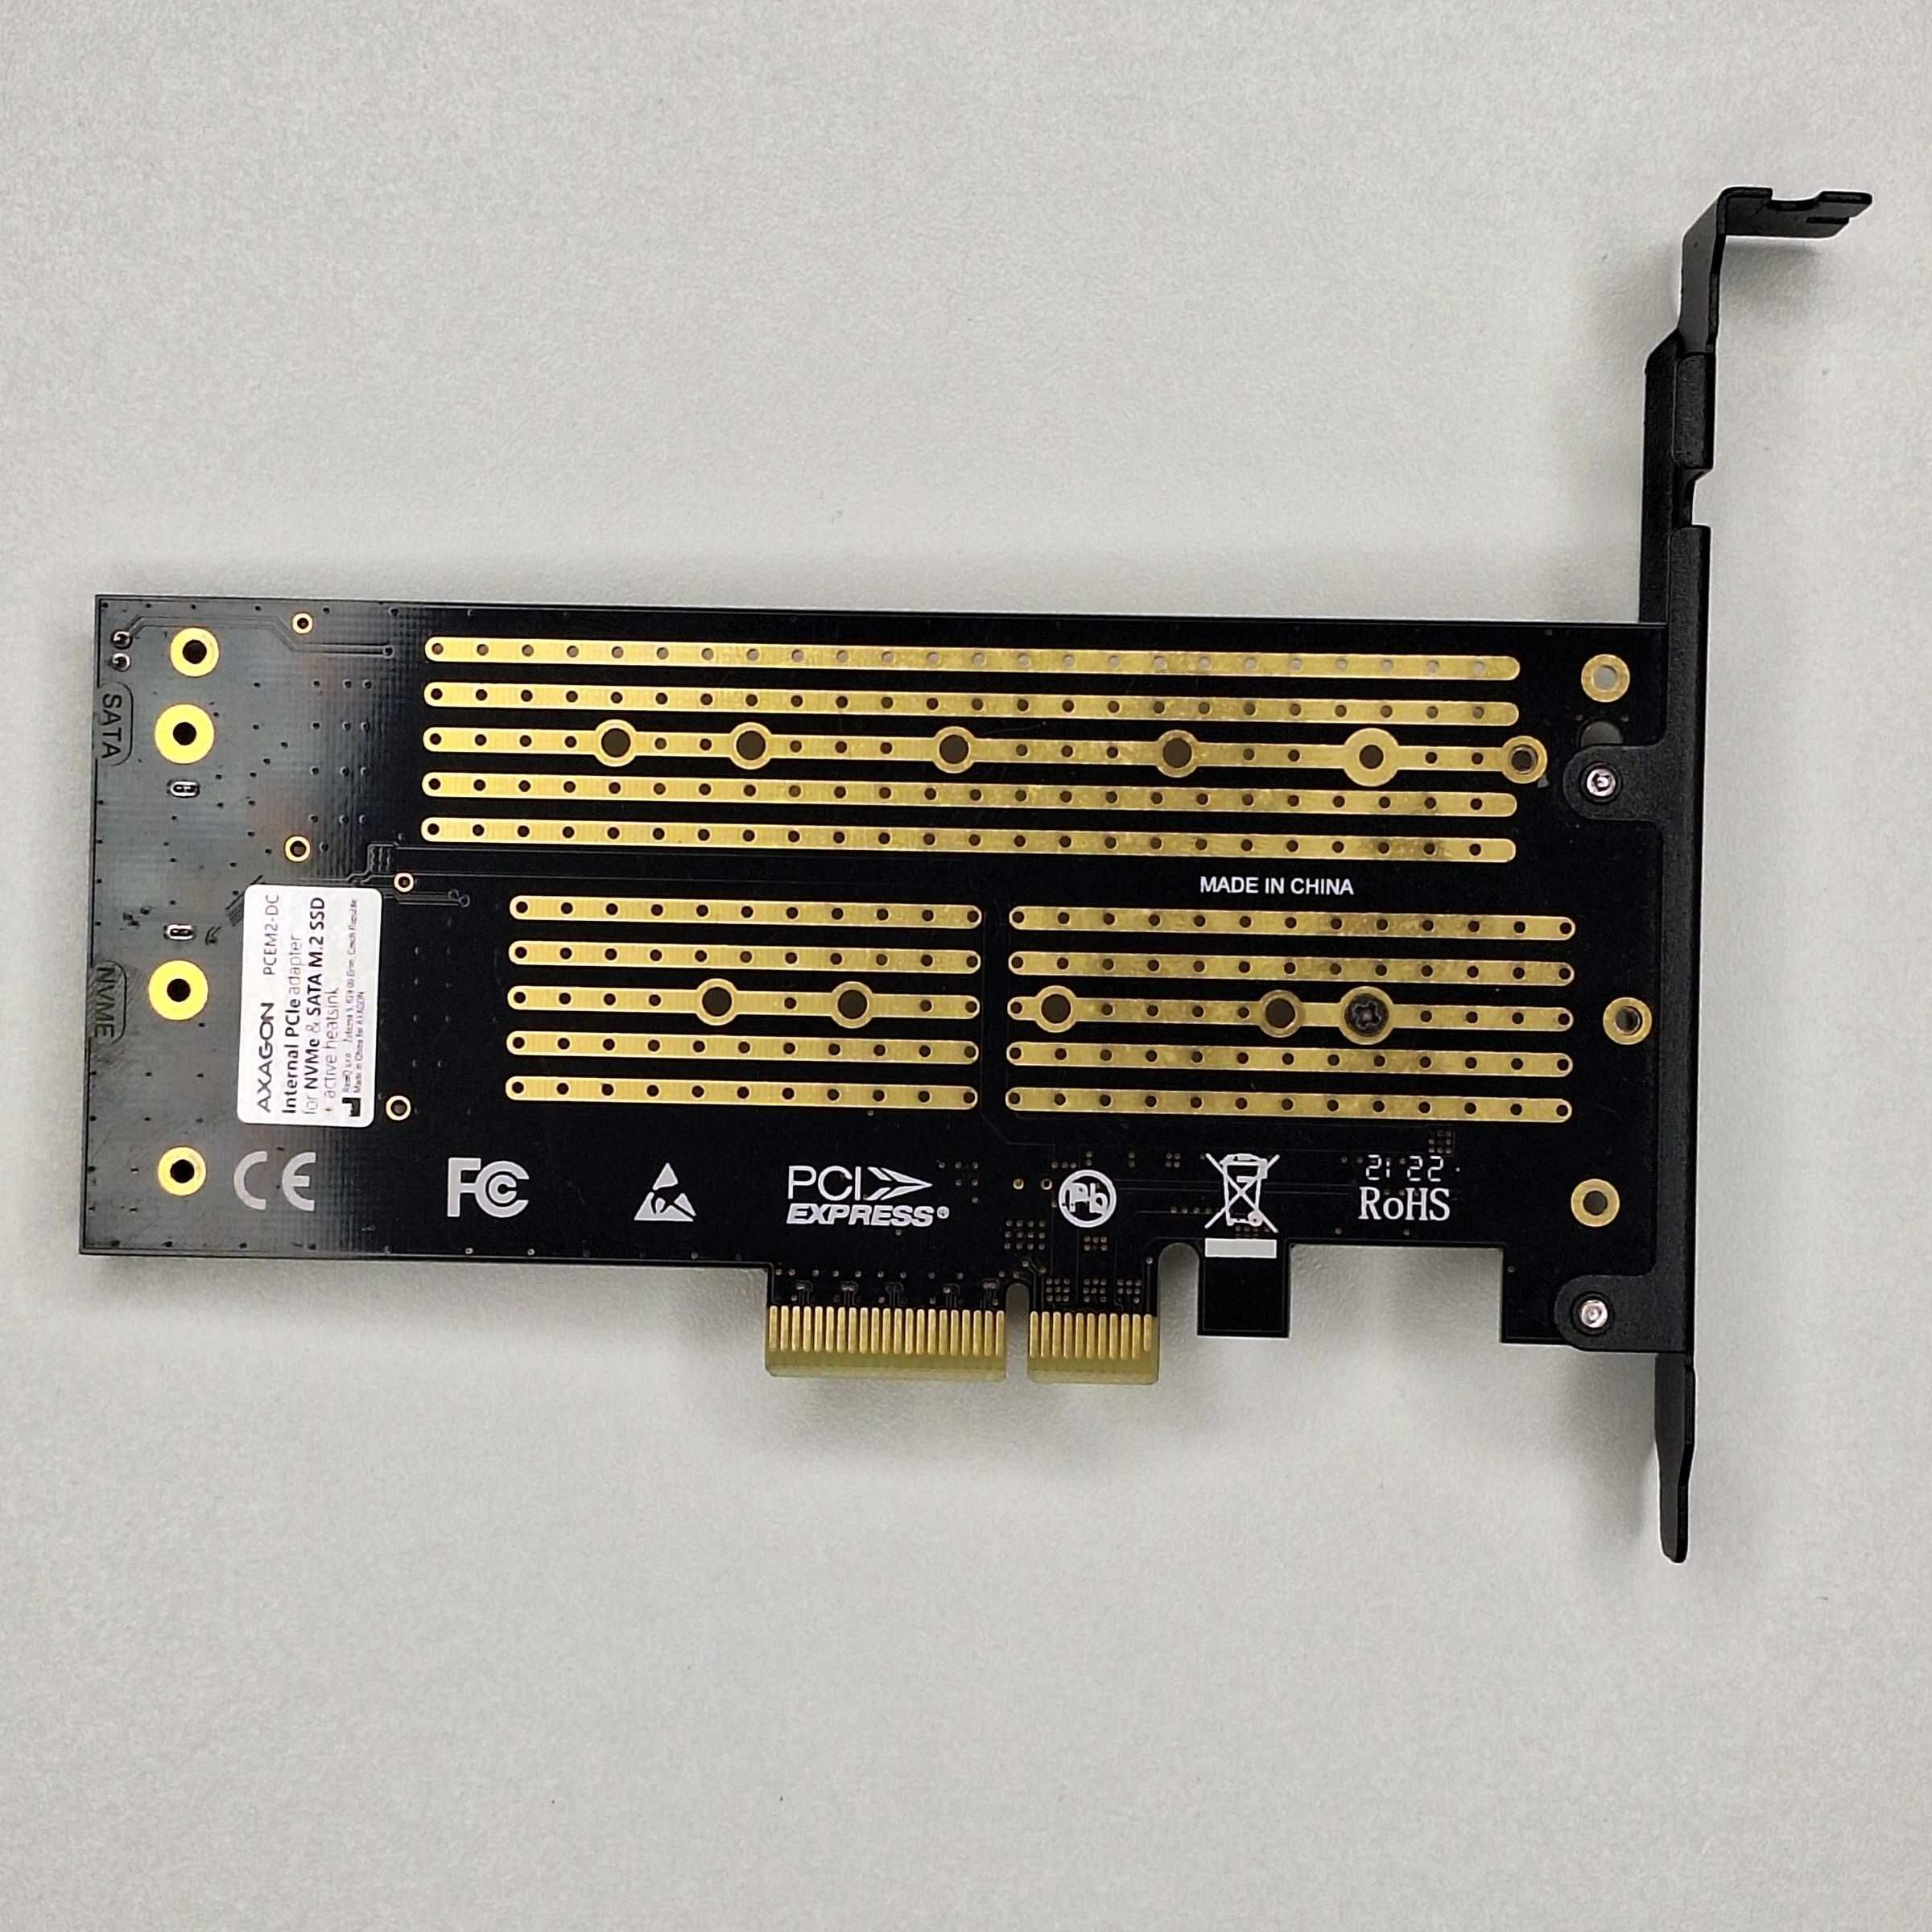 Adapter Dysku SSD Axagon PCEM2-DC PCIE NVME+SATA M.2